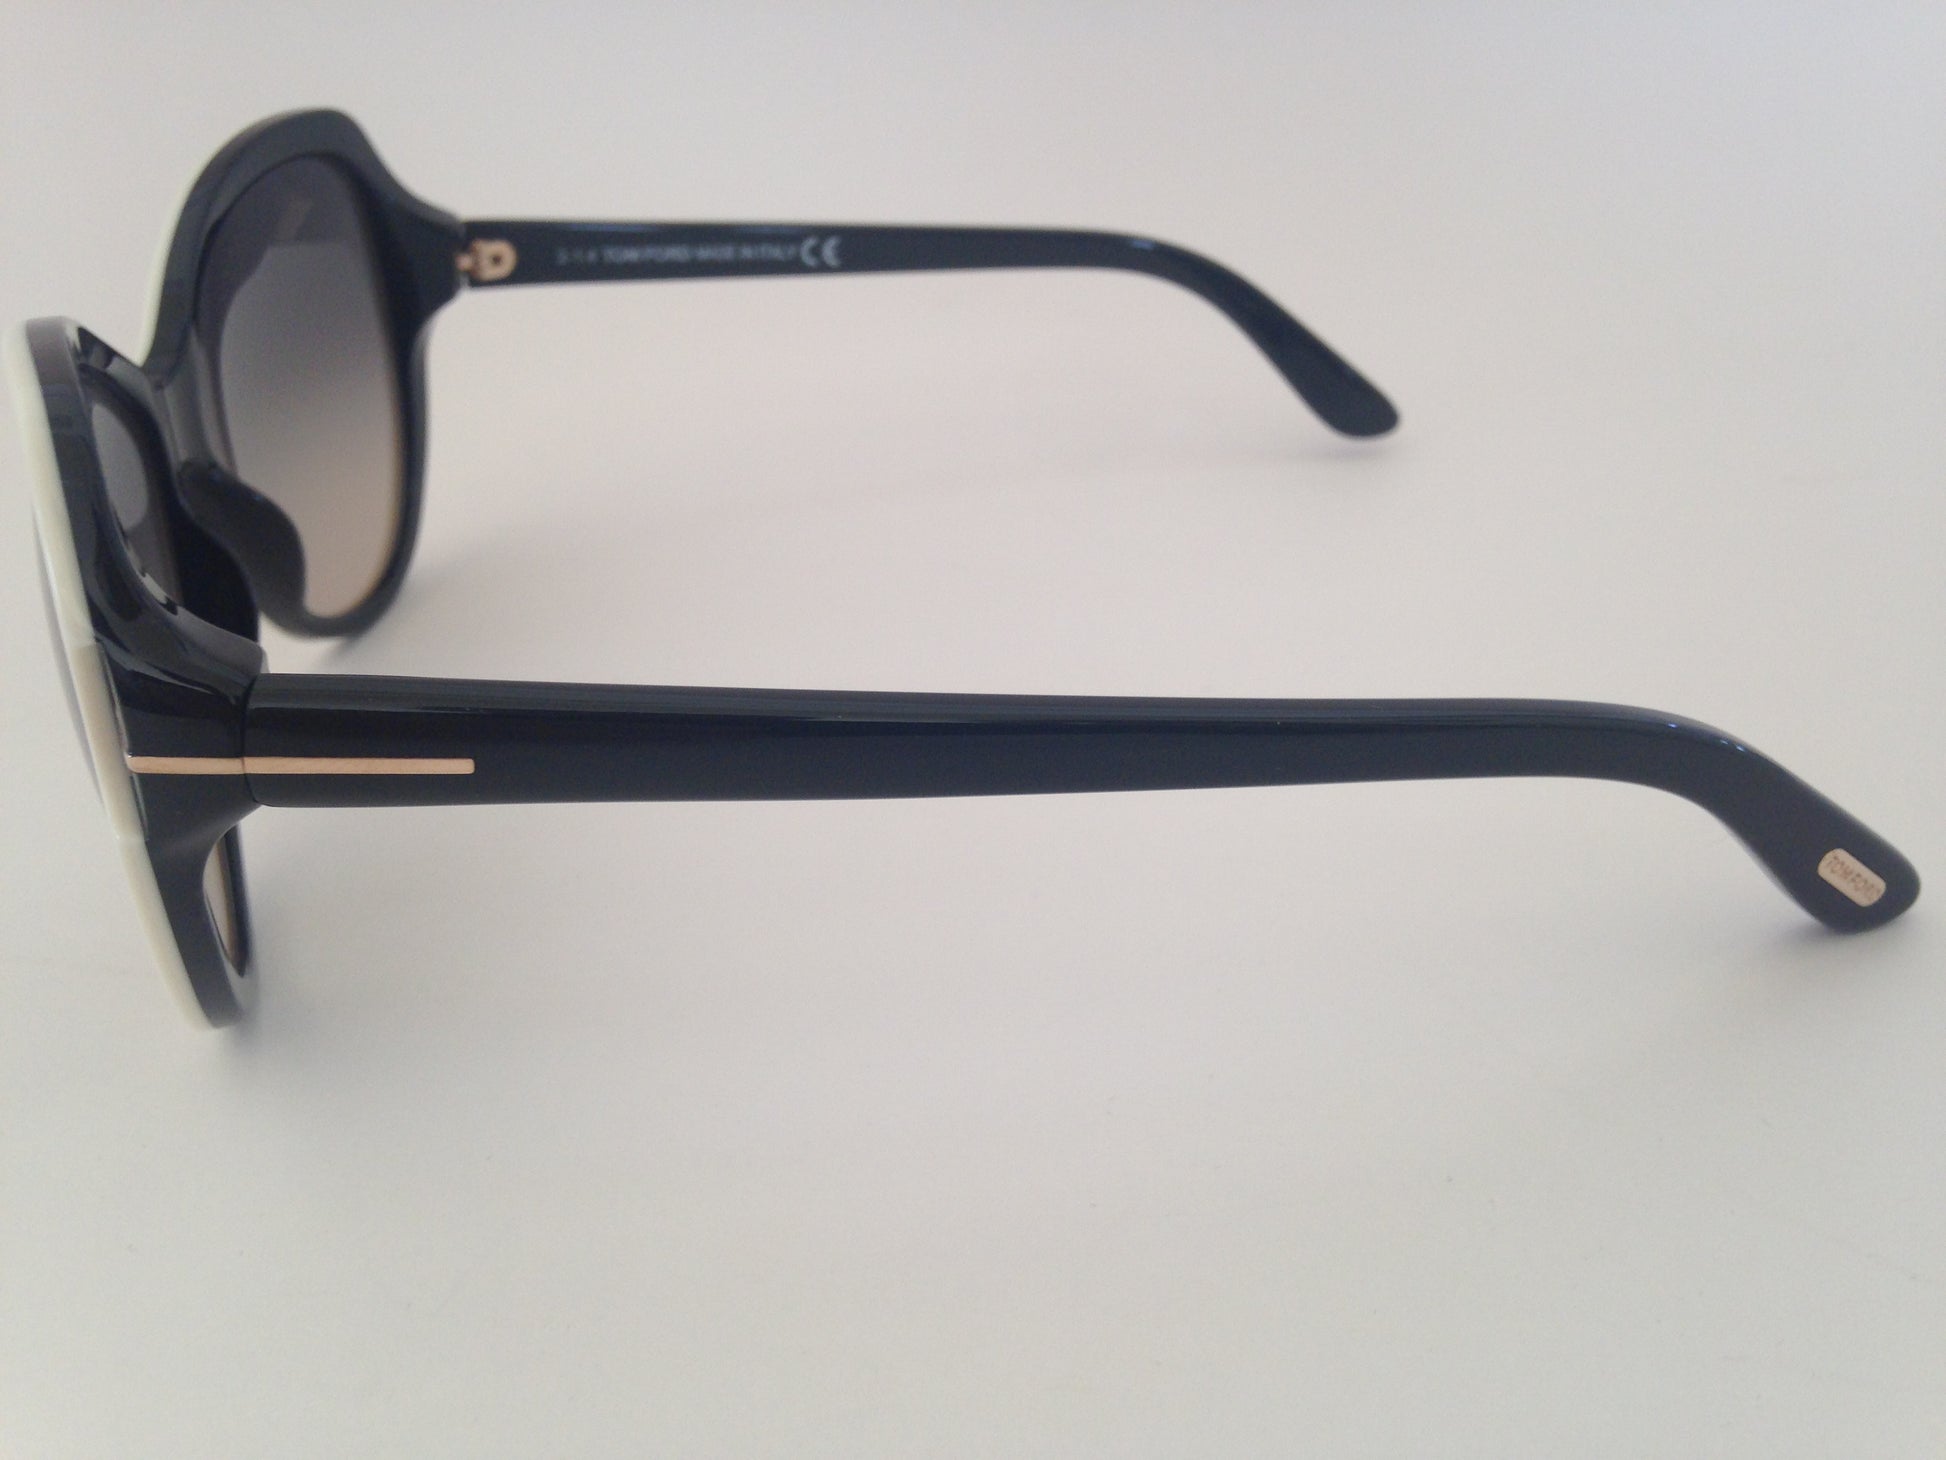 Tom Ford Valentina Sunglasses Large Oversize Butterfly White Black Frame Gray Gradient Lens Tf326 25B - Sunglasses